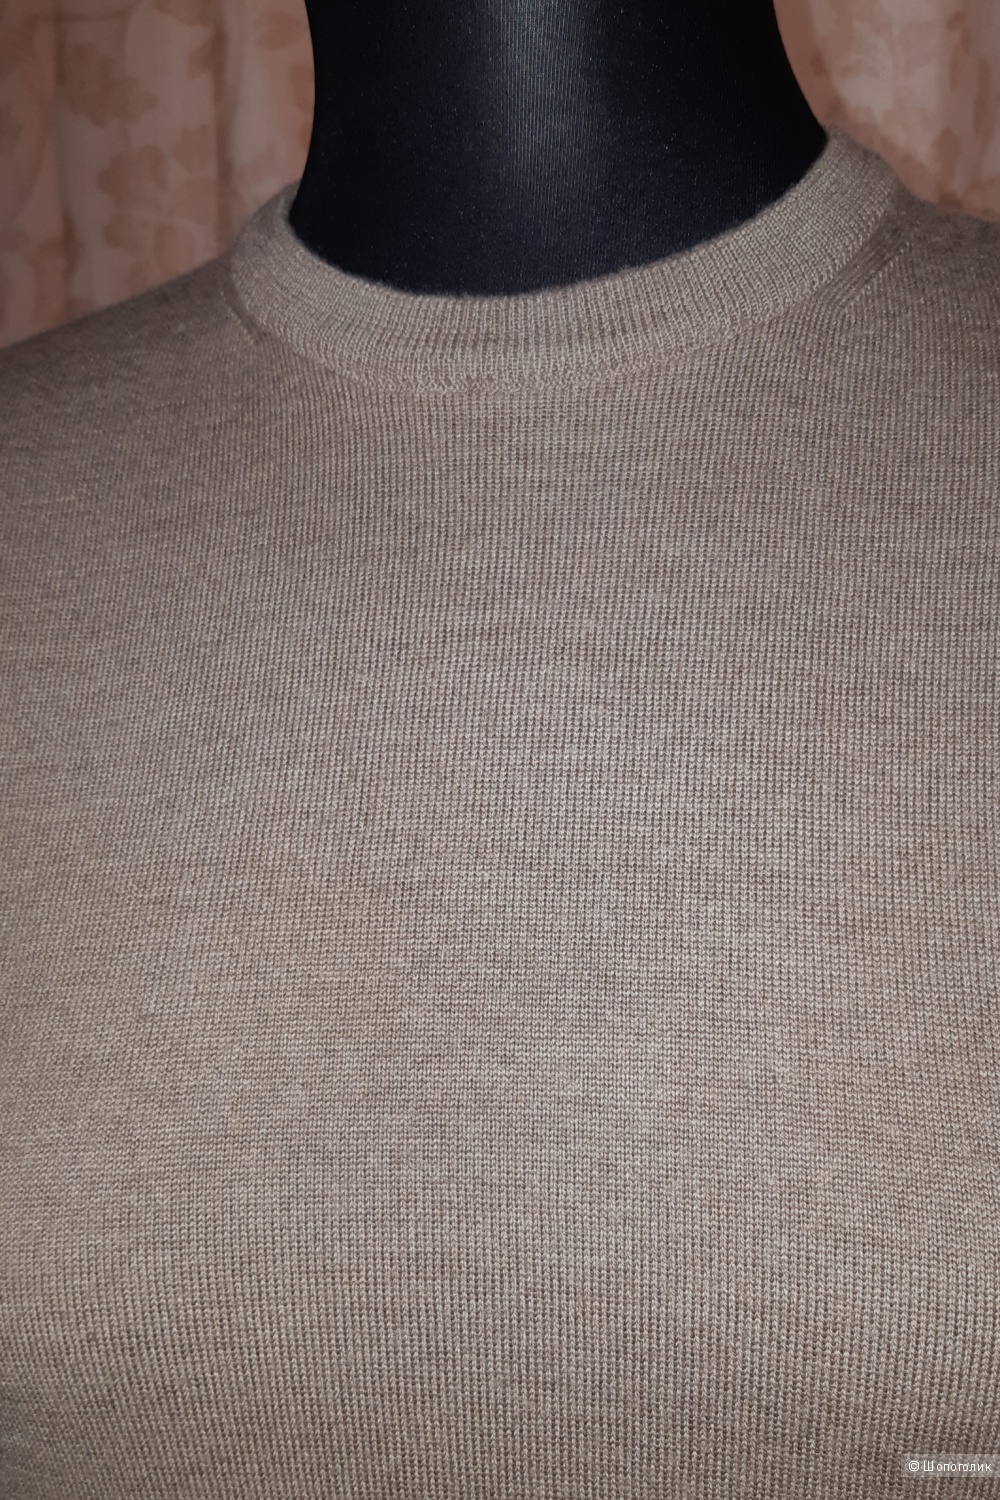 Пуловер aldo colitti, размер s/m